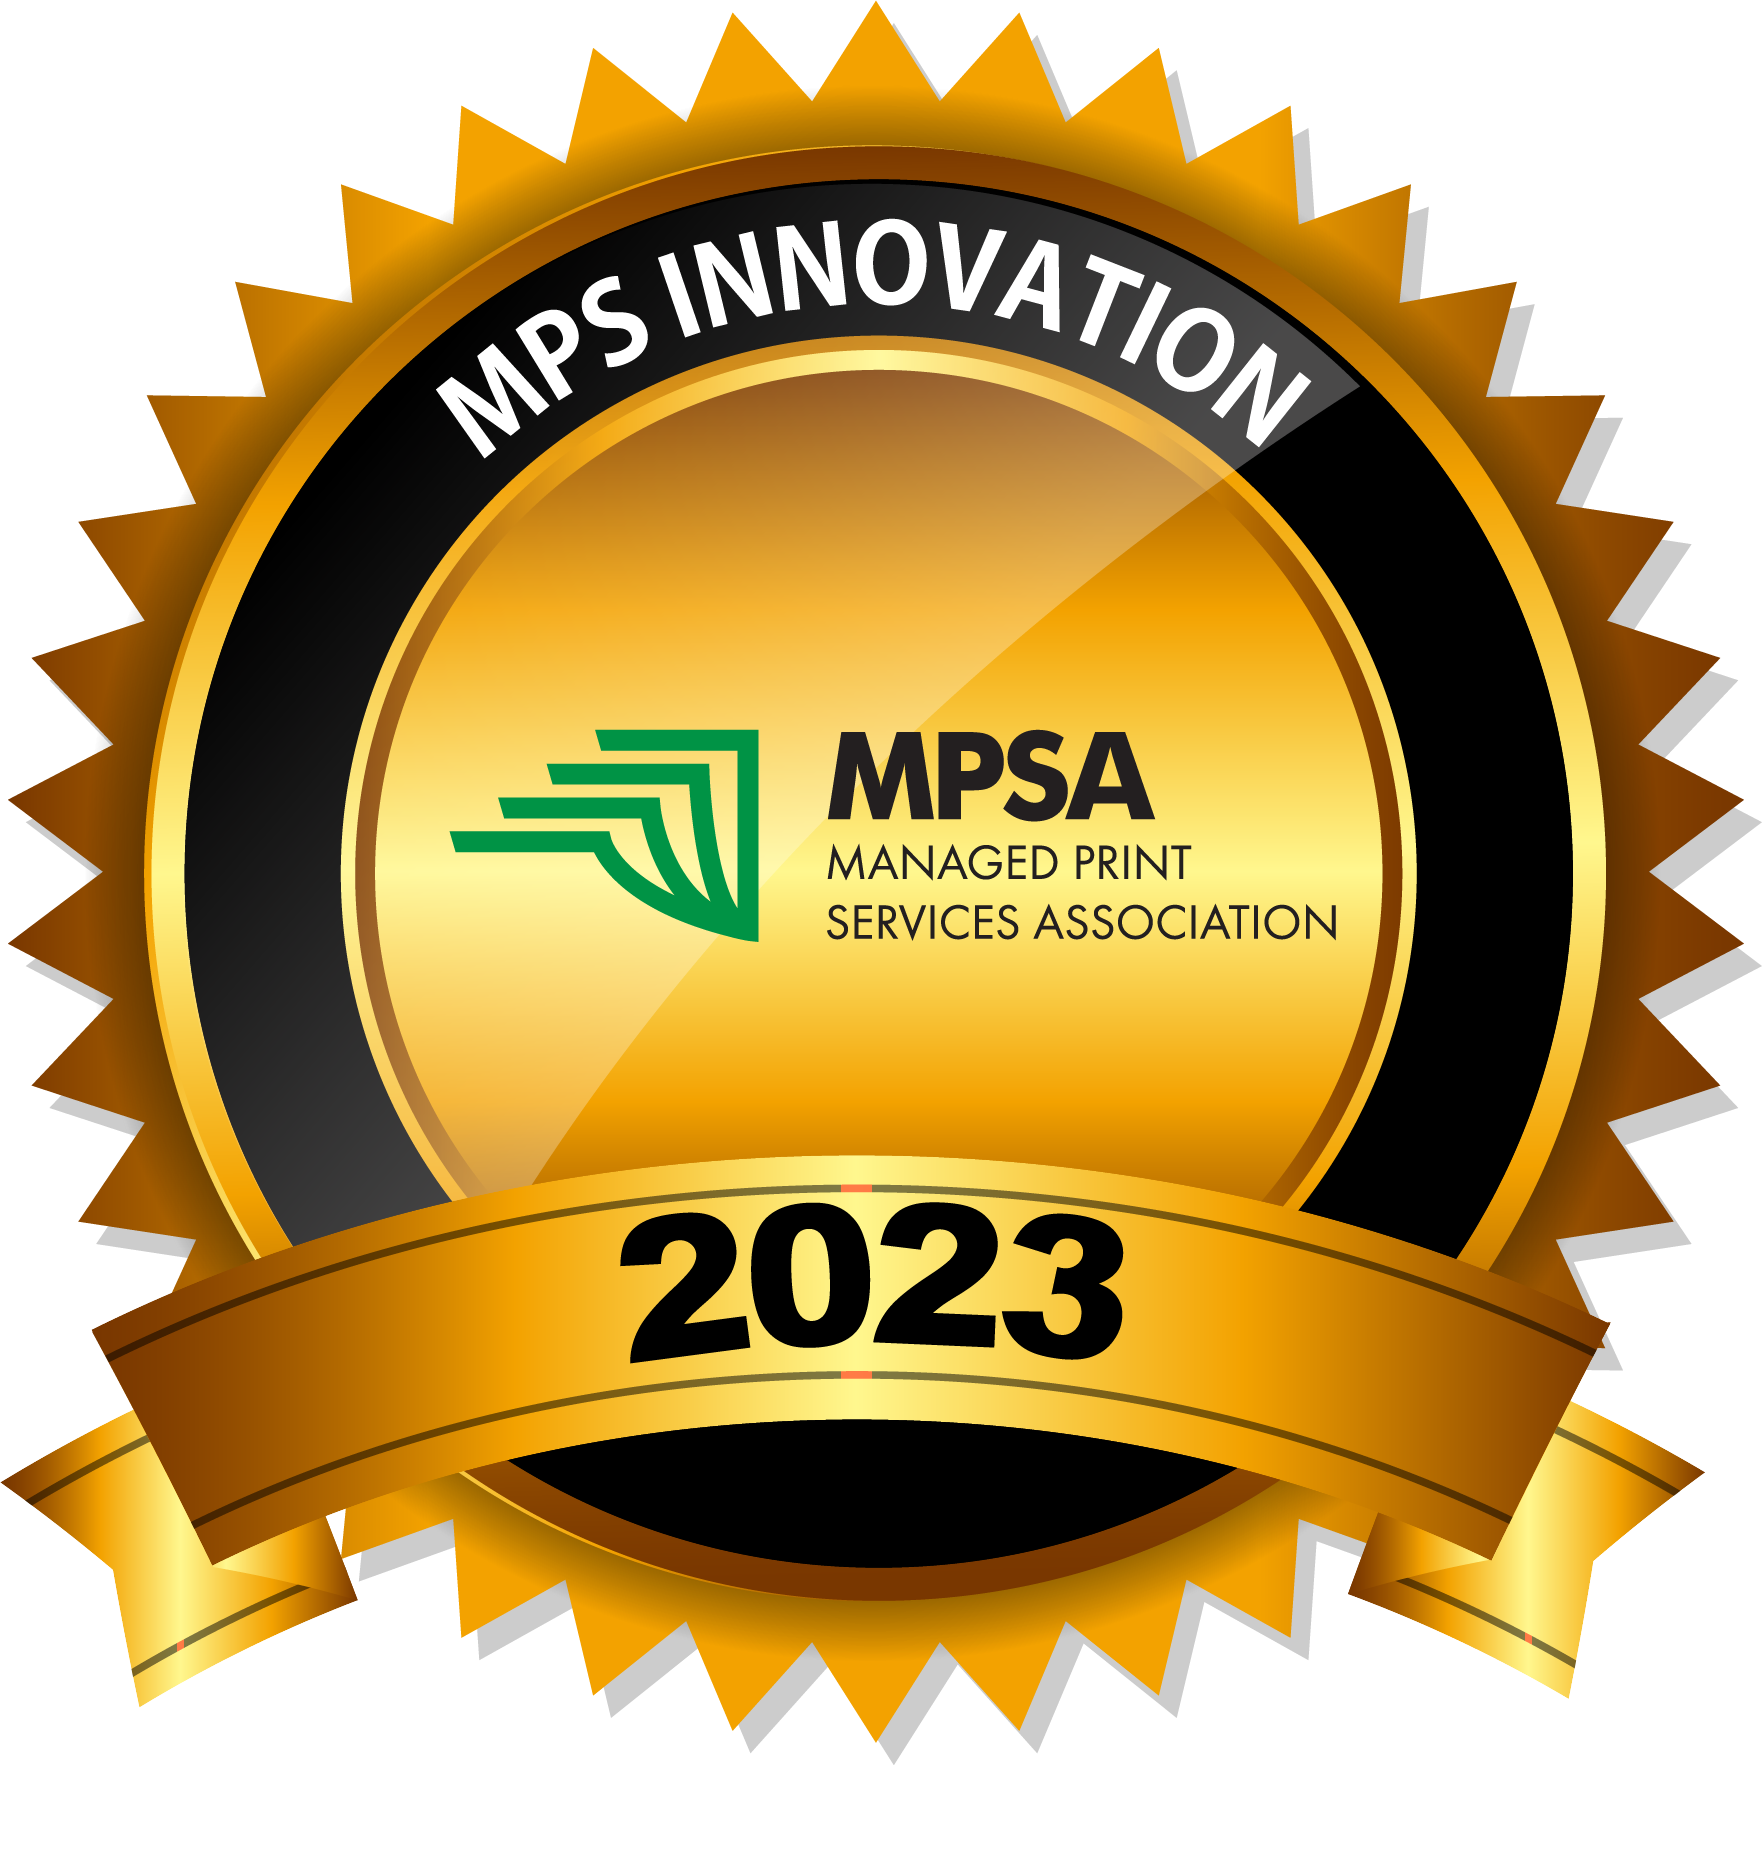 MPSA_MPS_Innovation icon 2023-1